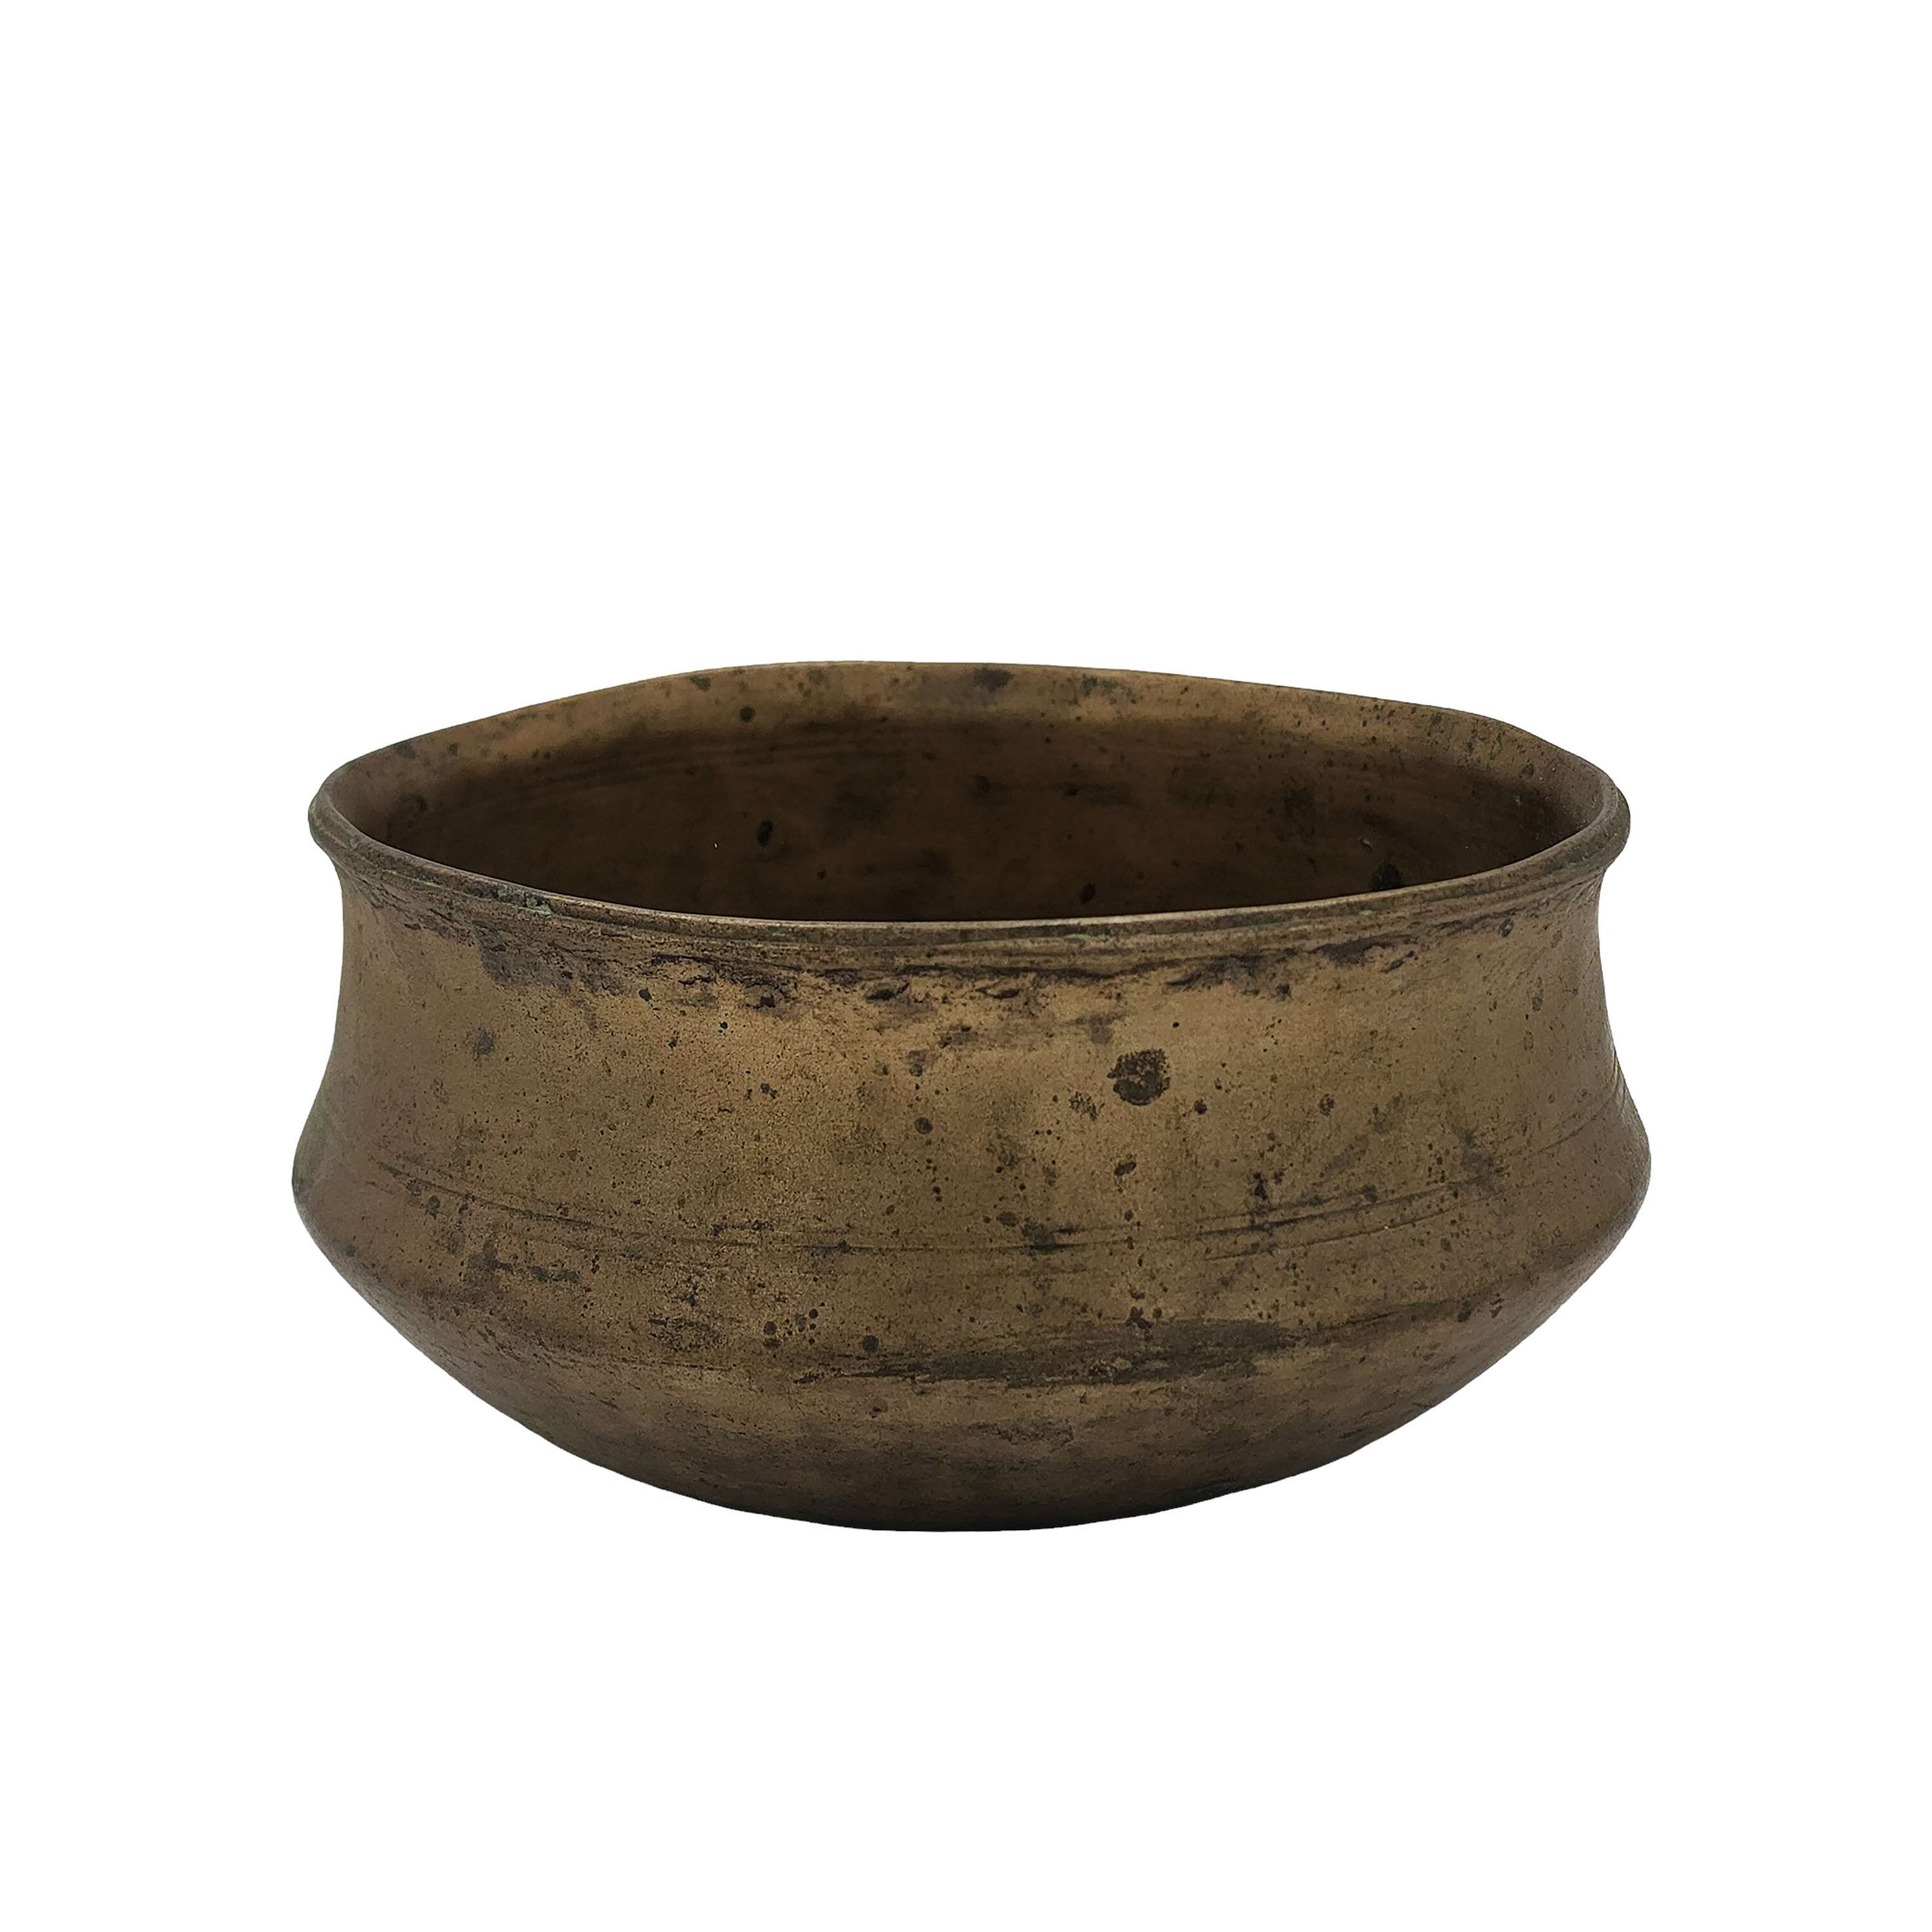 Buddhist Hand Beaten Singing Bowl, antique